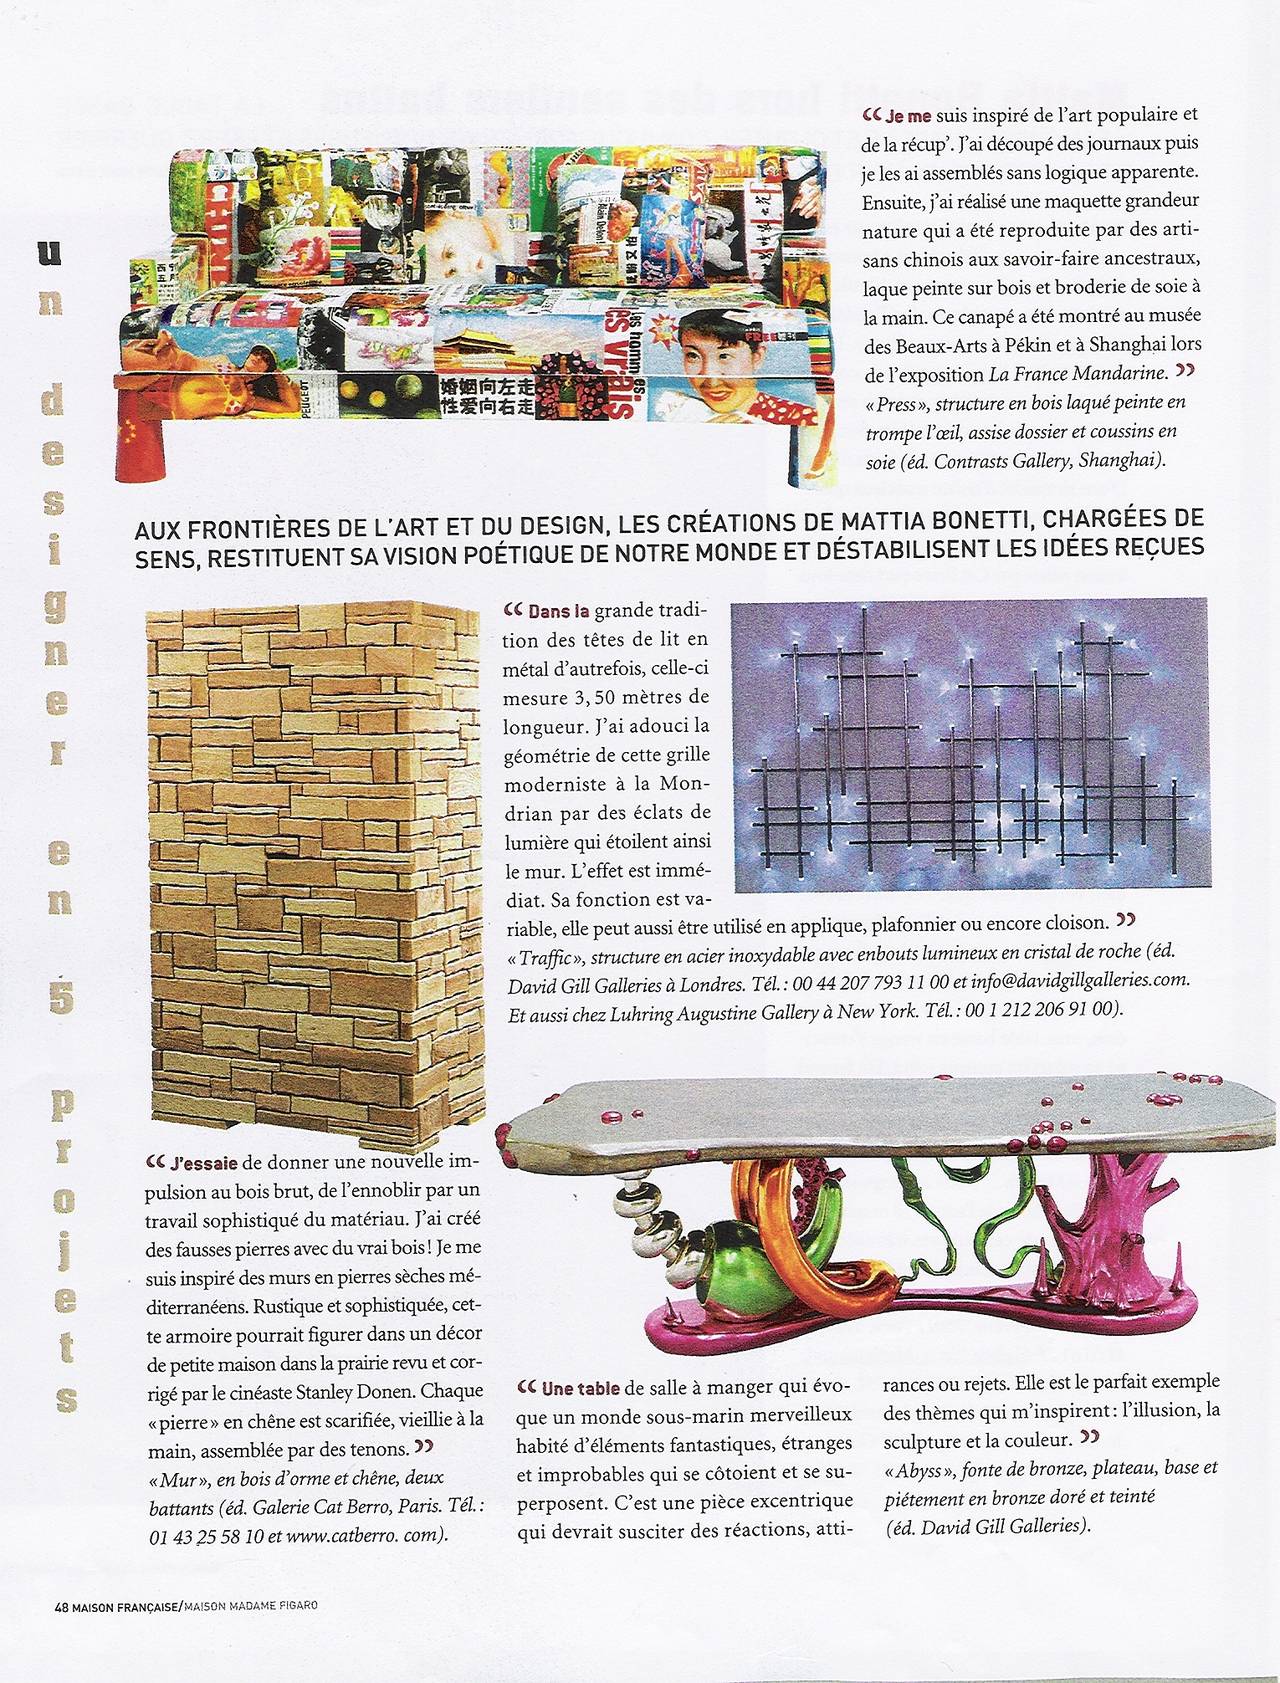 Mur Storage Unit. Oak and elm. Mattia Bonetti. Cat-Berro Edition 2006., in Stock 1